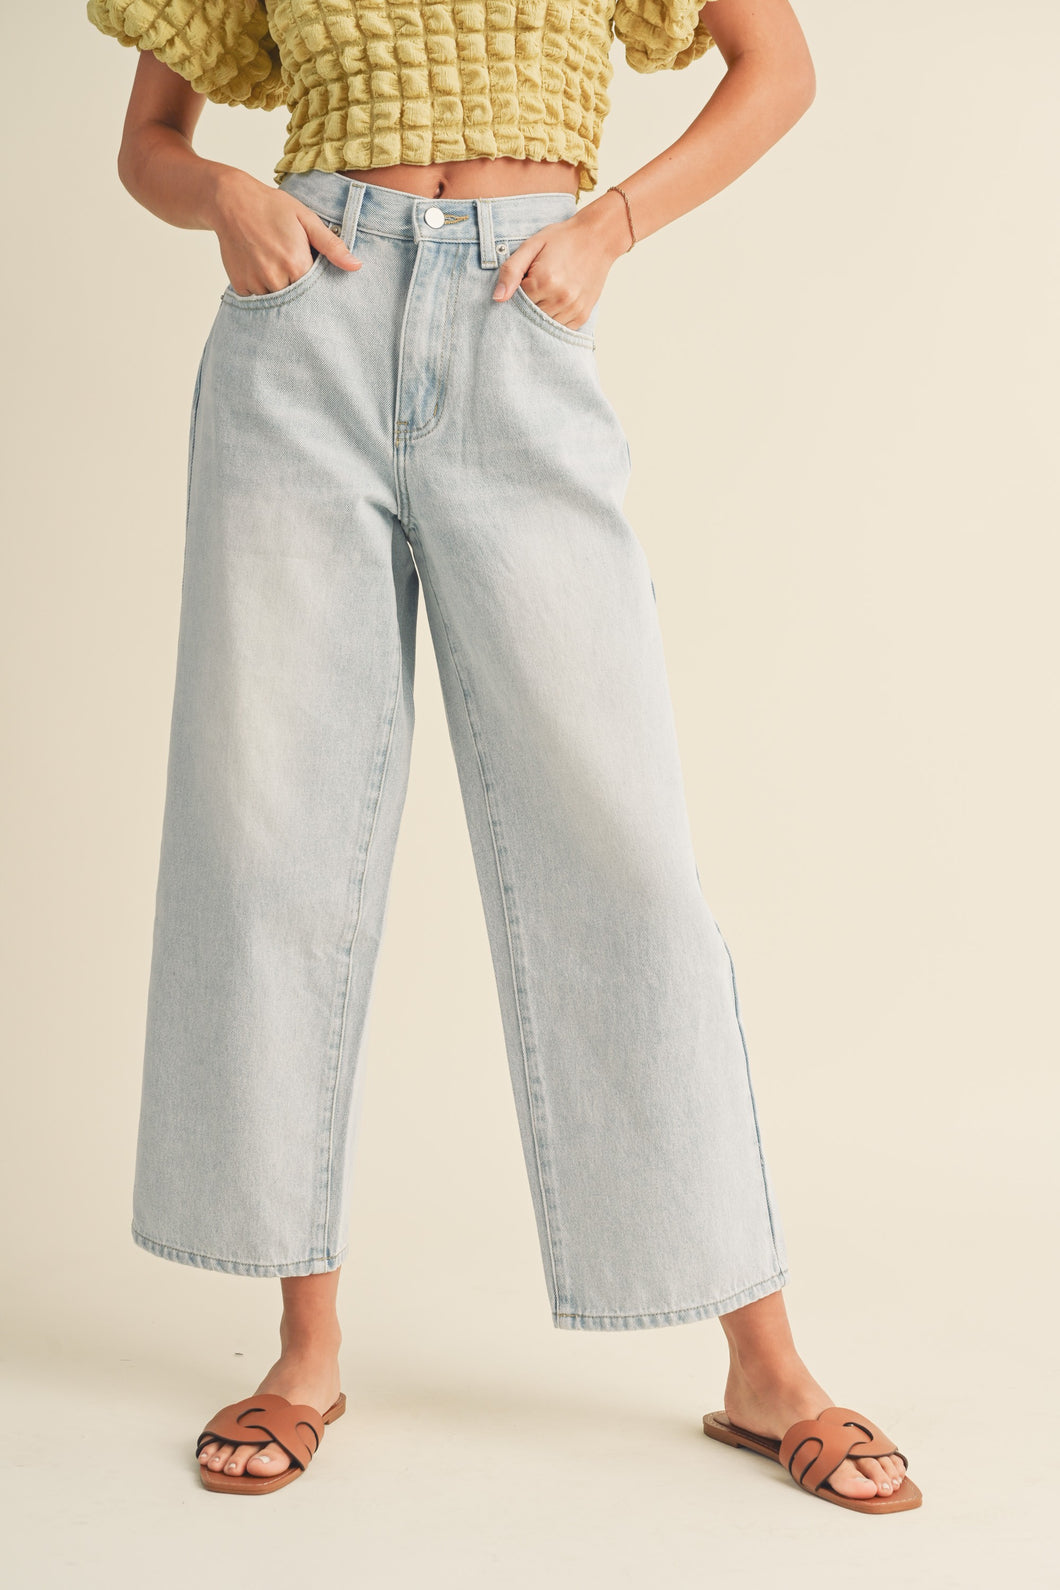 NEWEST ARRIVAL Adjustable Crop Denim Jeans